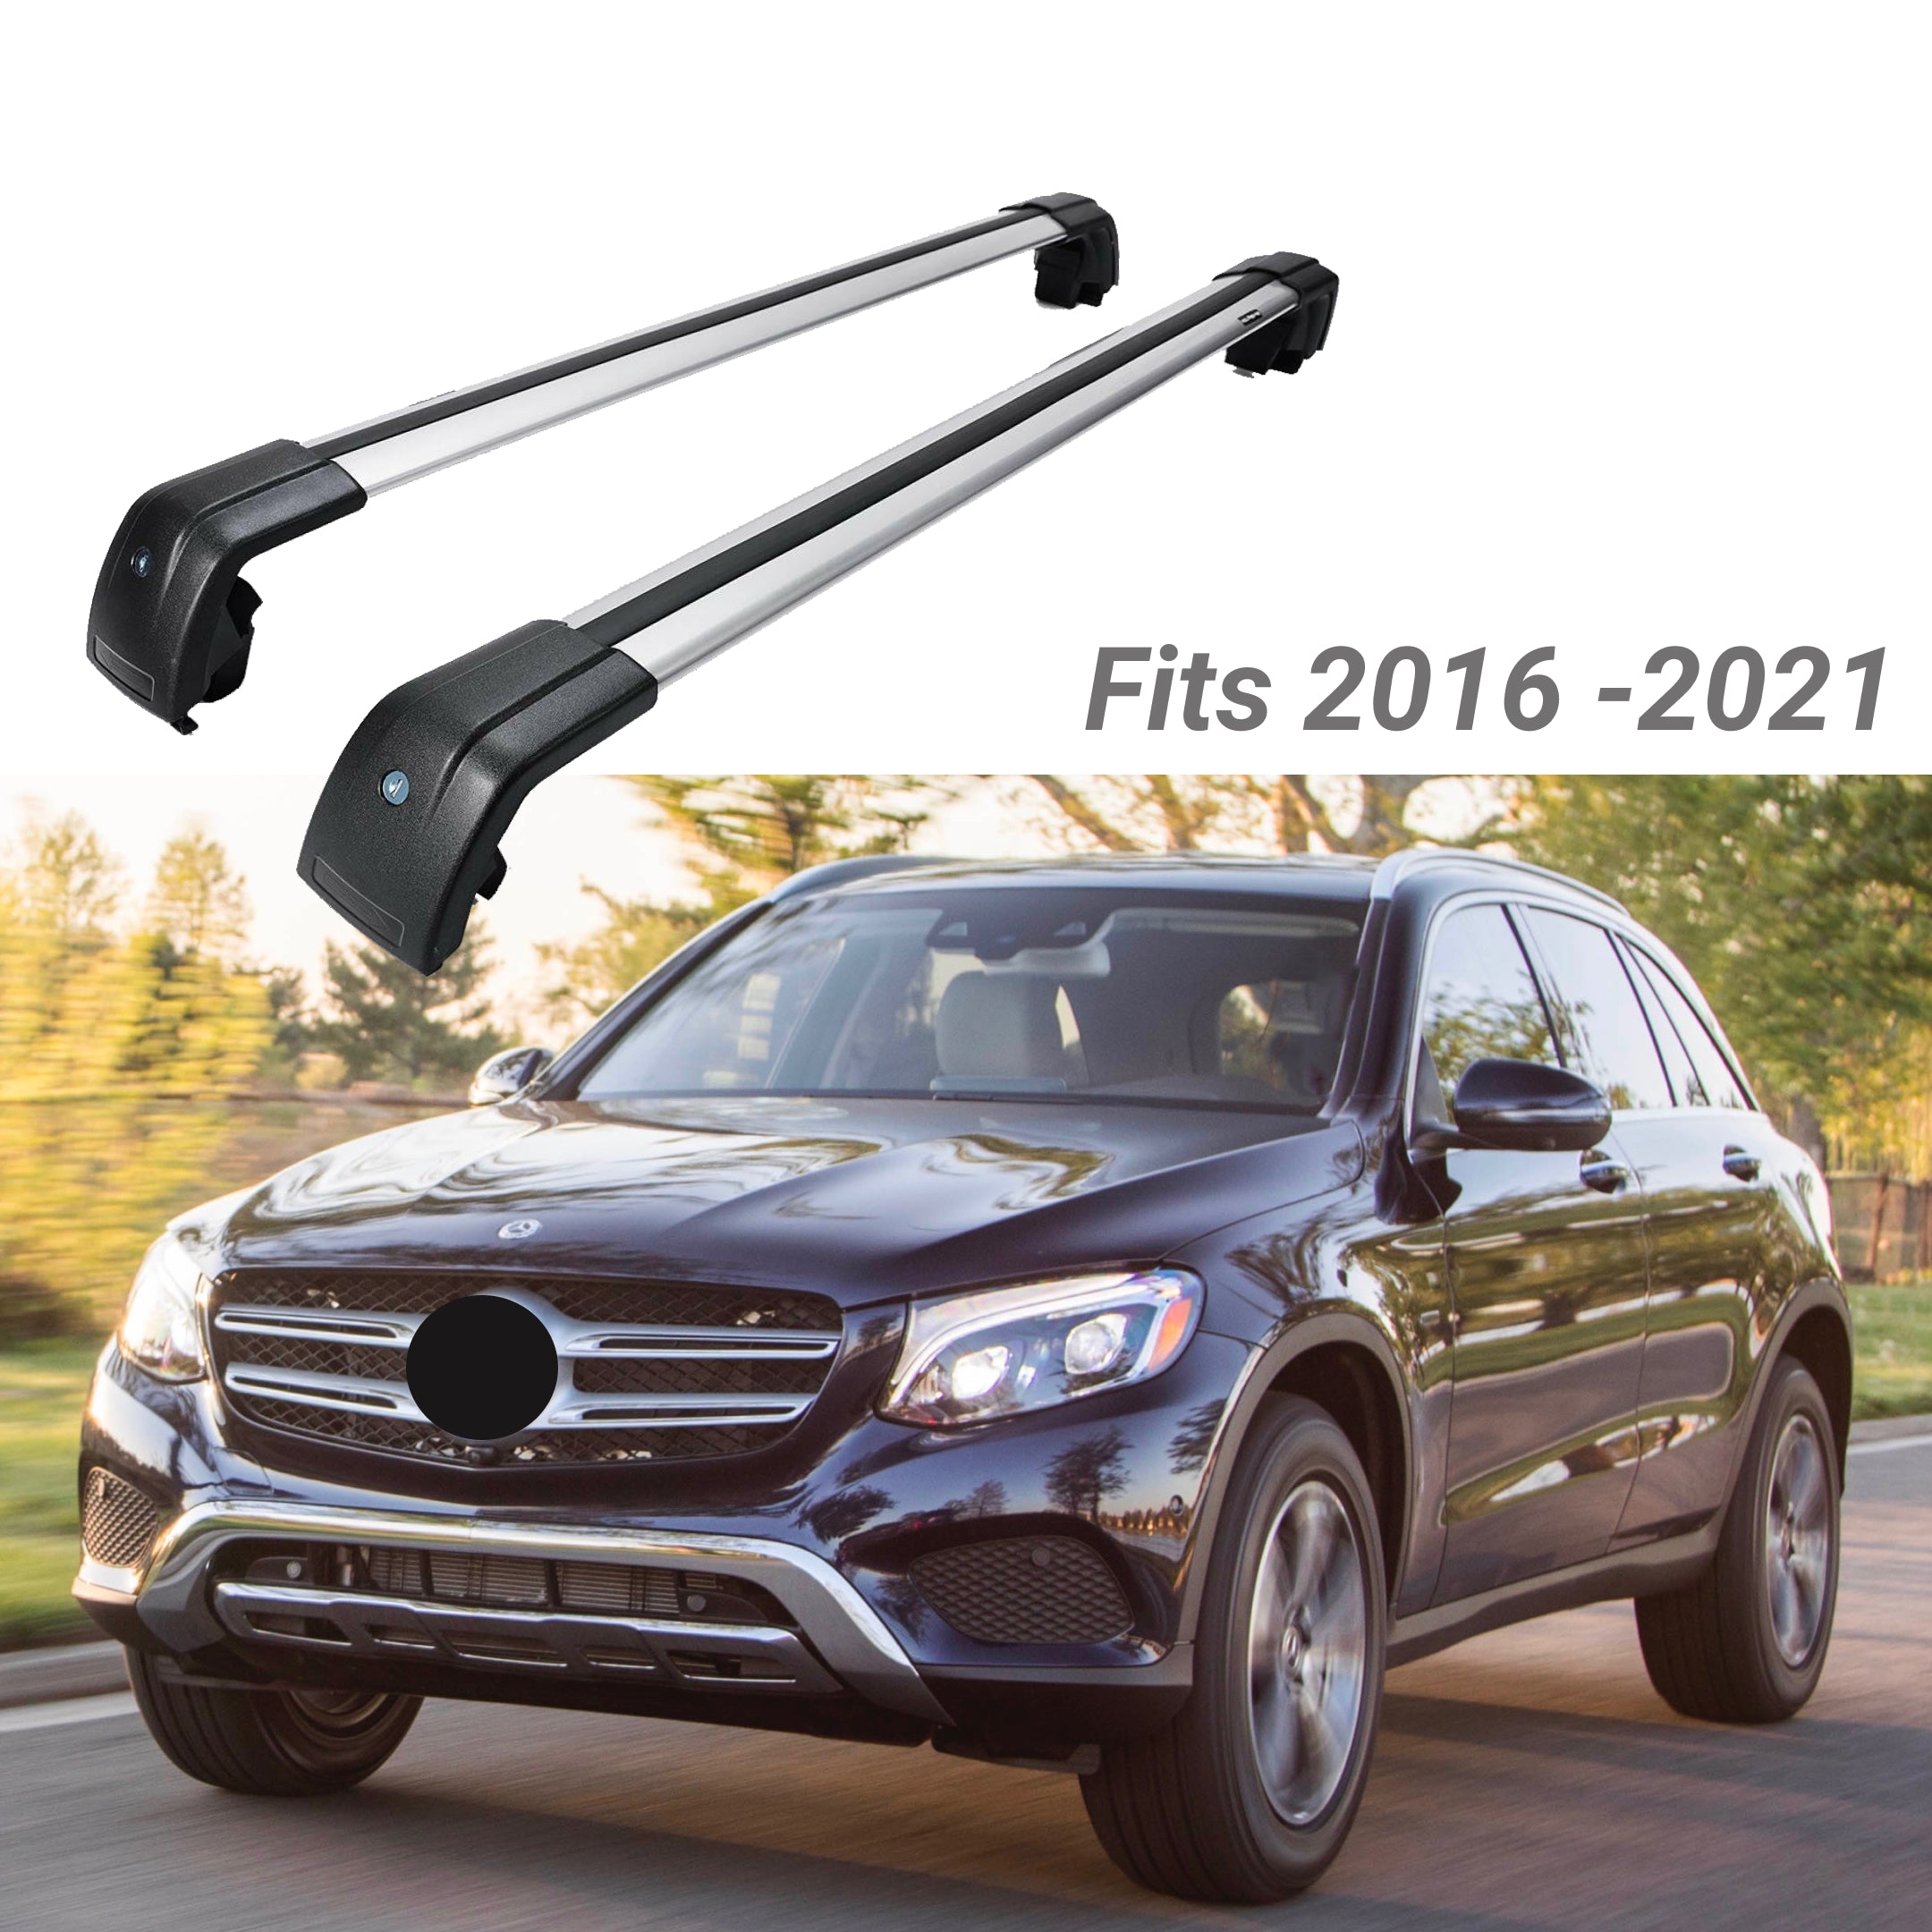 Fit 2016-2020 Mercedes Benz GLC Black and Sliver Roof Rack Crossbar Luggage Carrier - 0